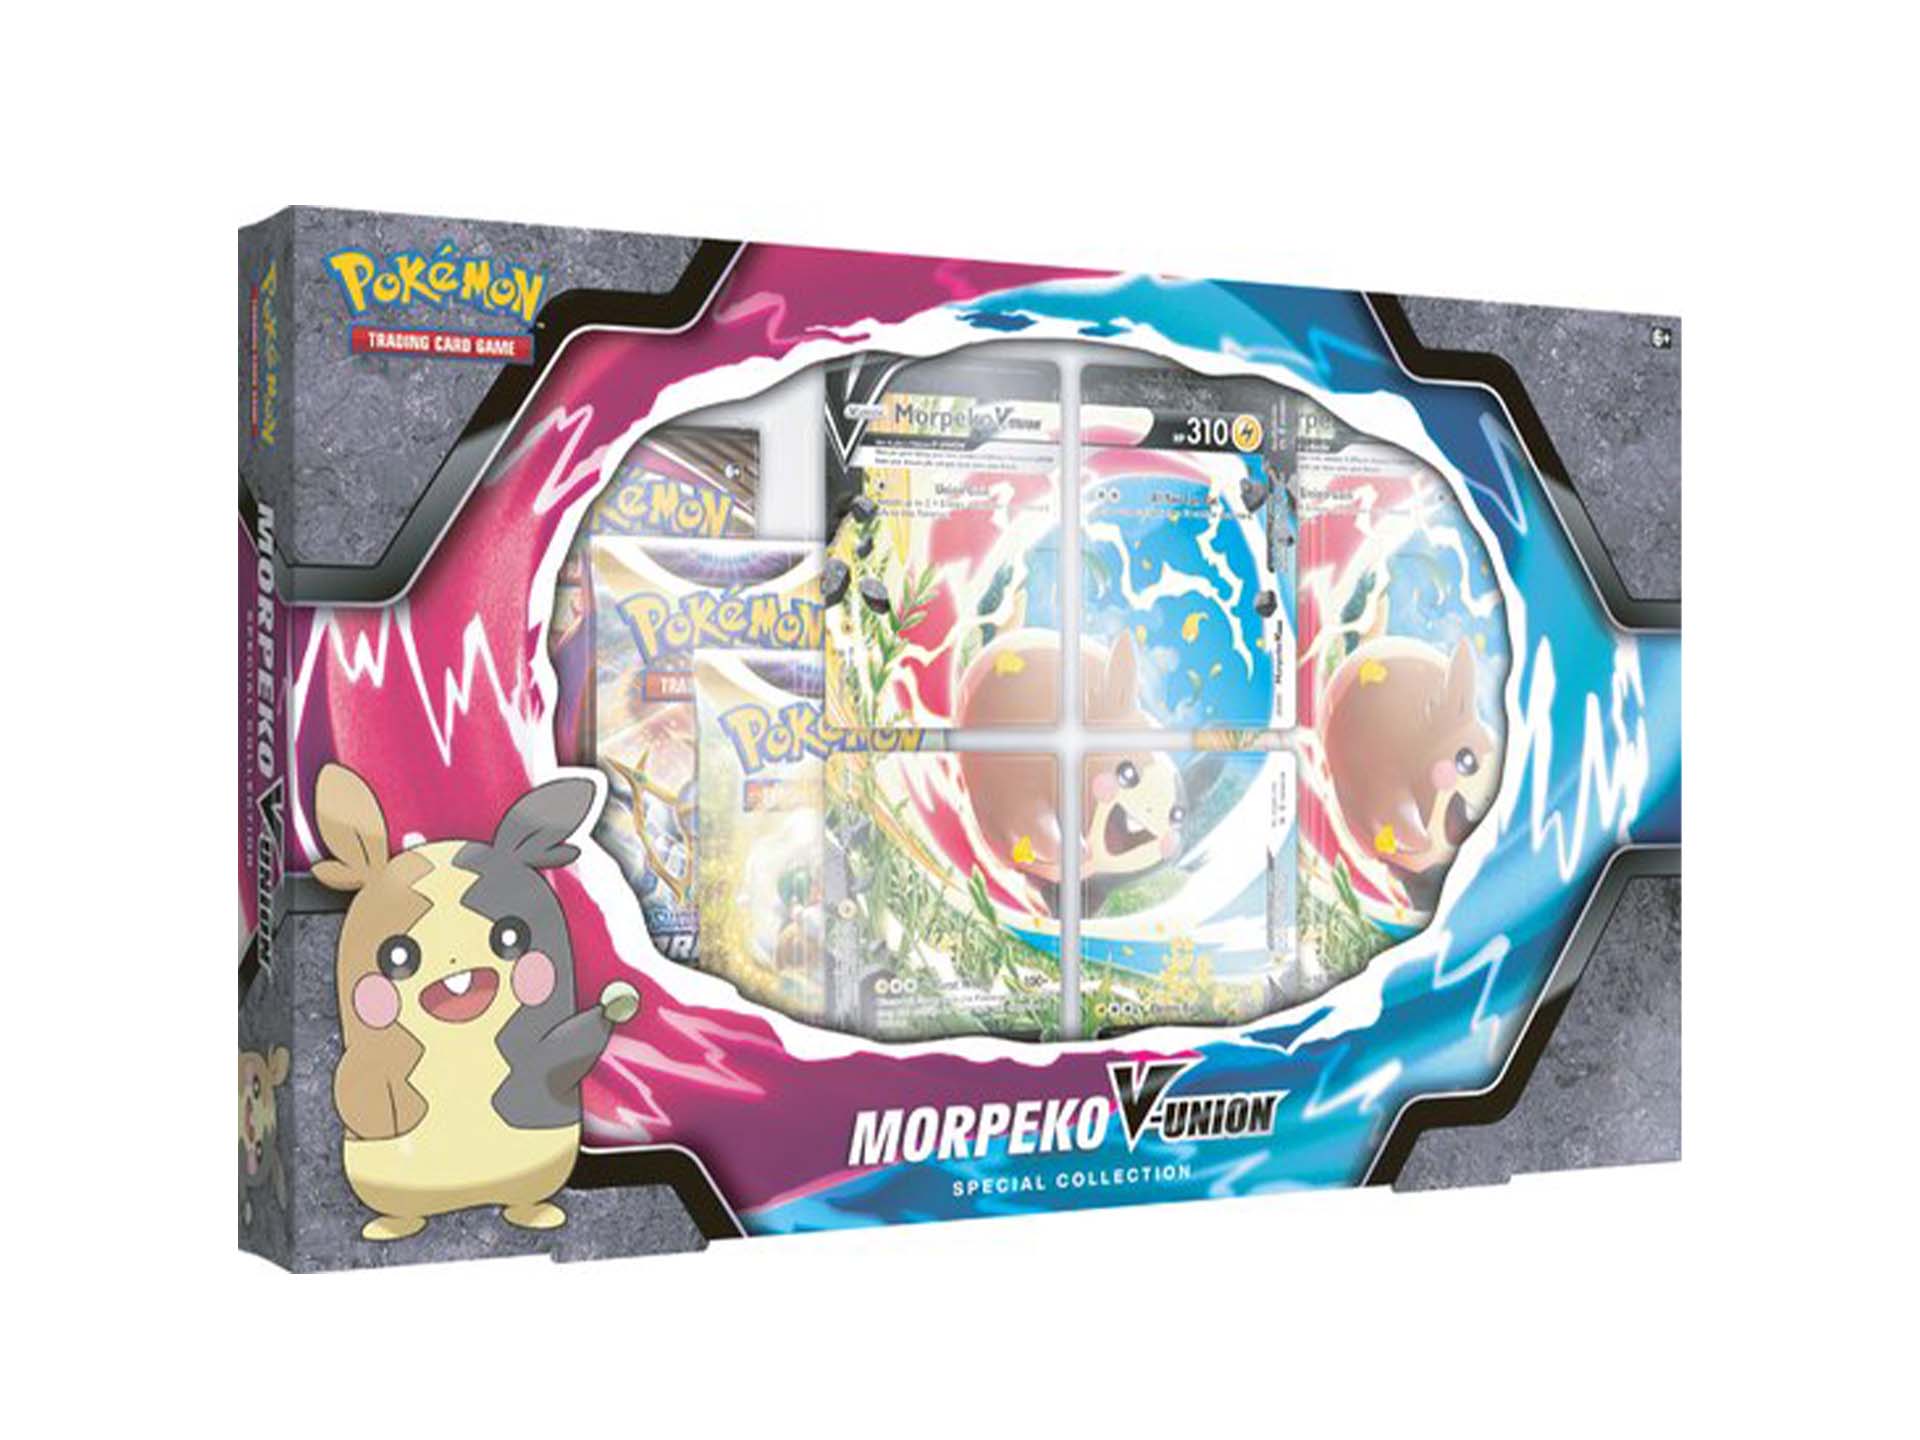 Pokémon Morpeko V-union Box